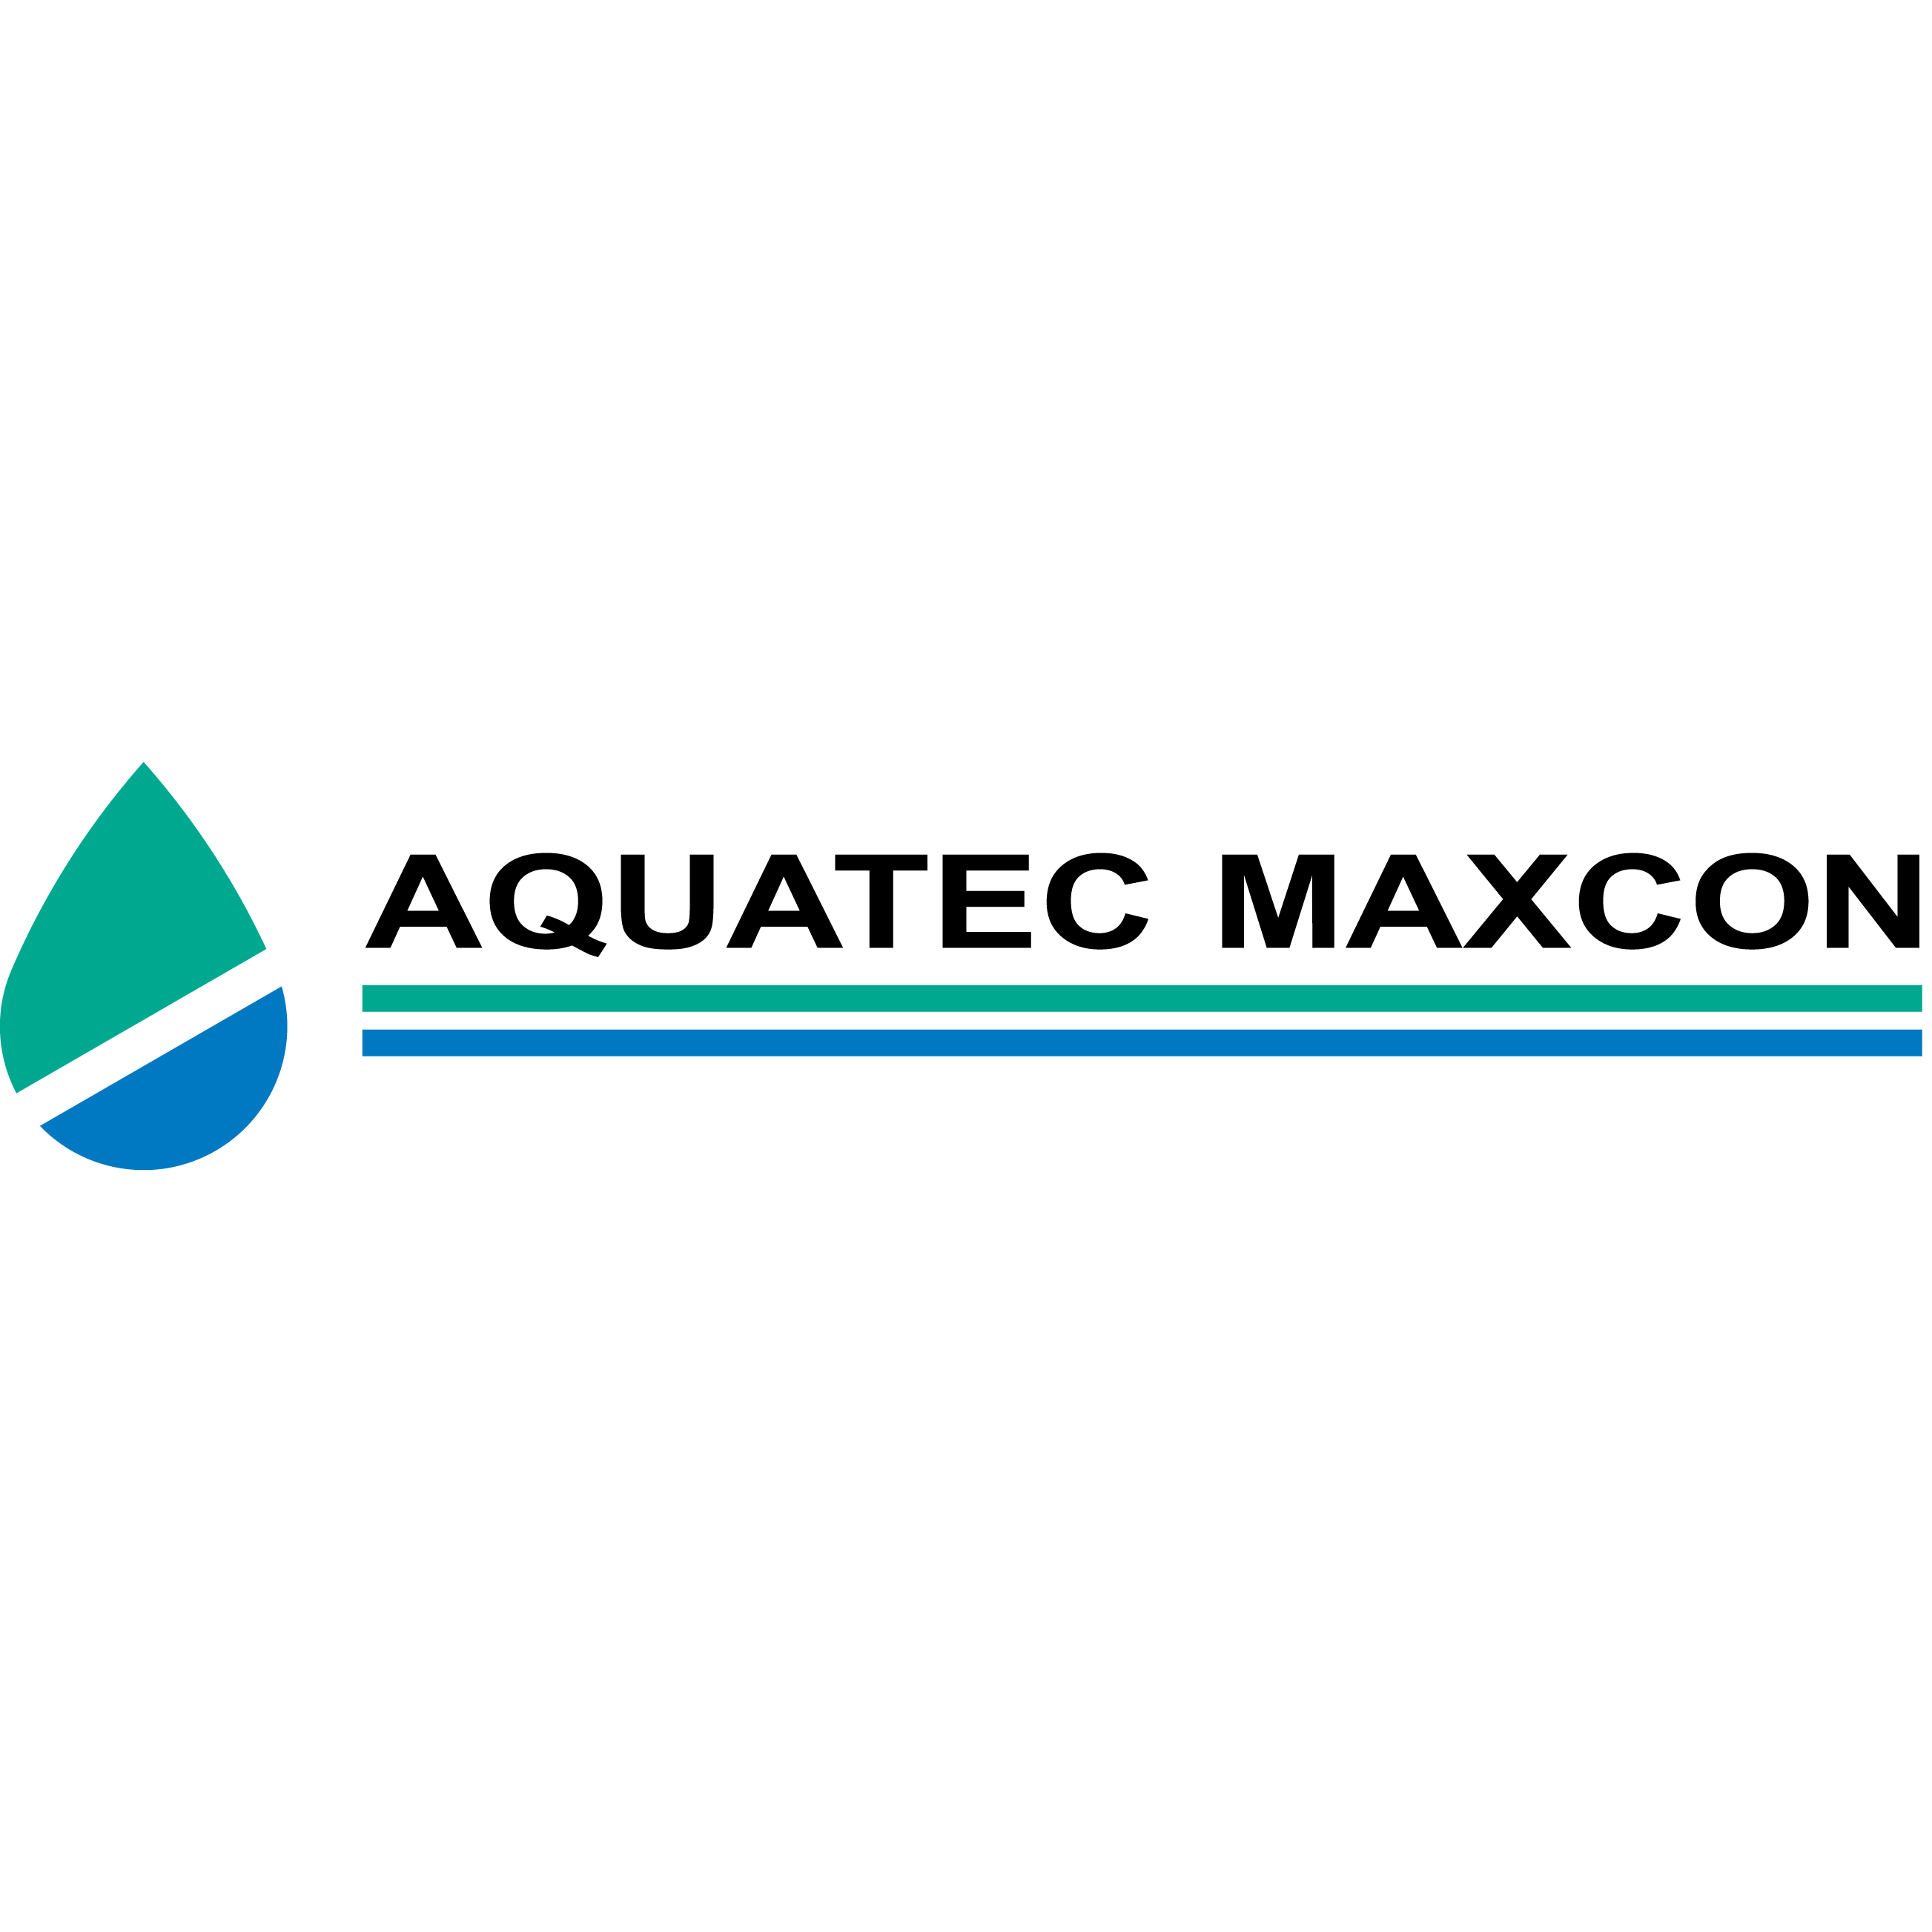 Aquatec Maxcon Pty Ltd - Wulkuraka, QLD 4305 - (07) 3813 7100 | ShowMeLocal.com